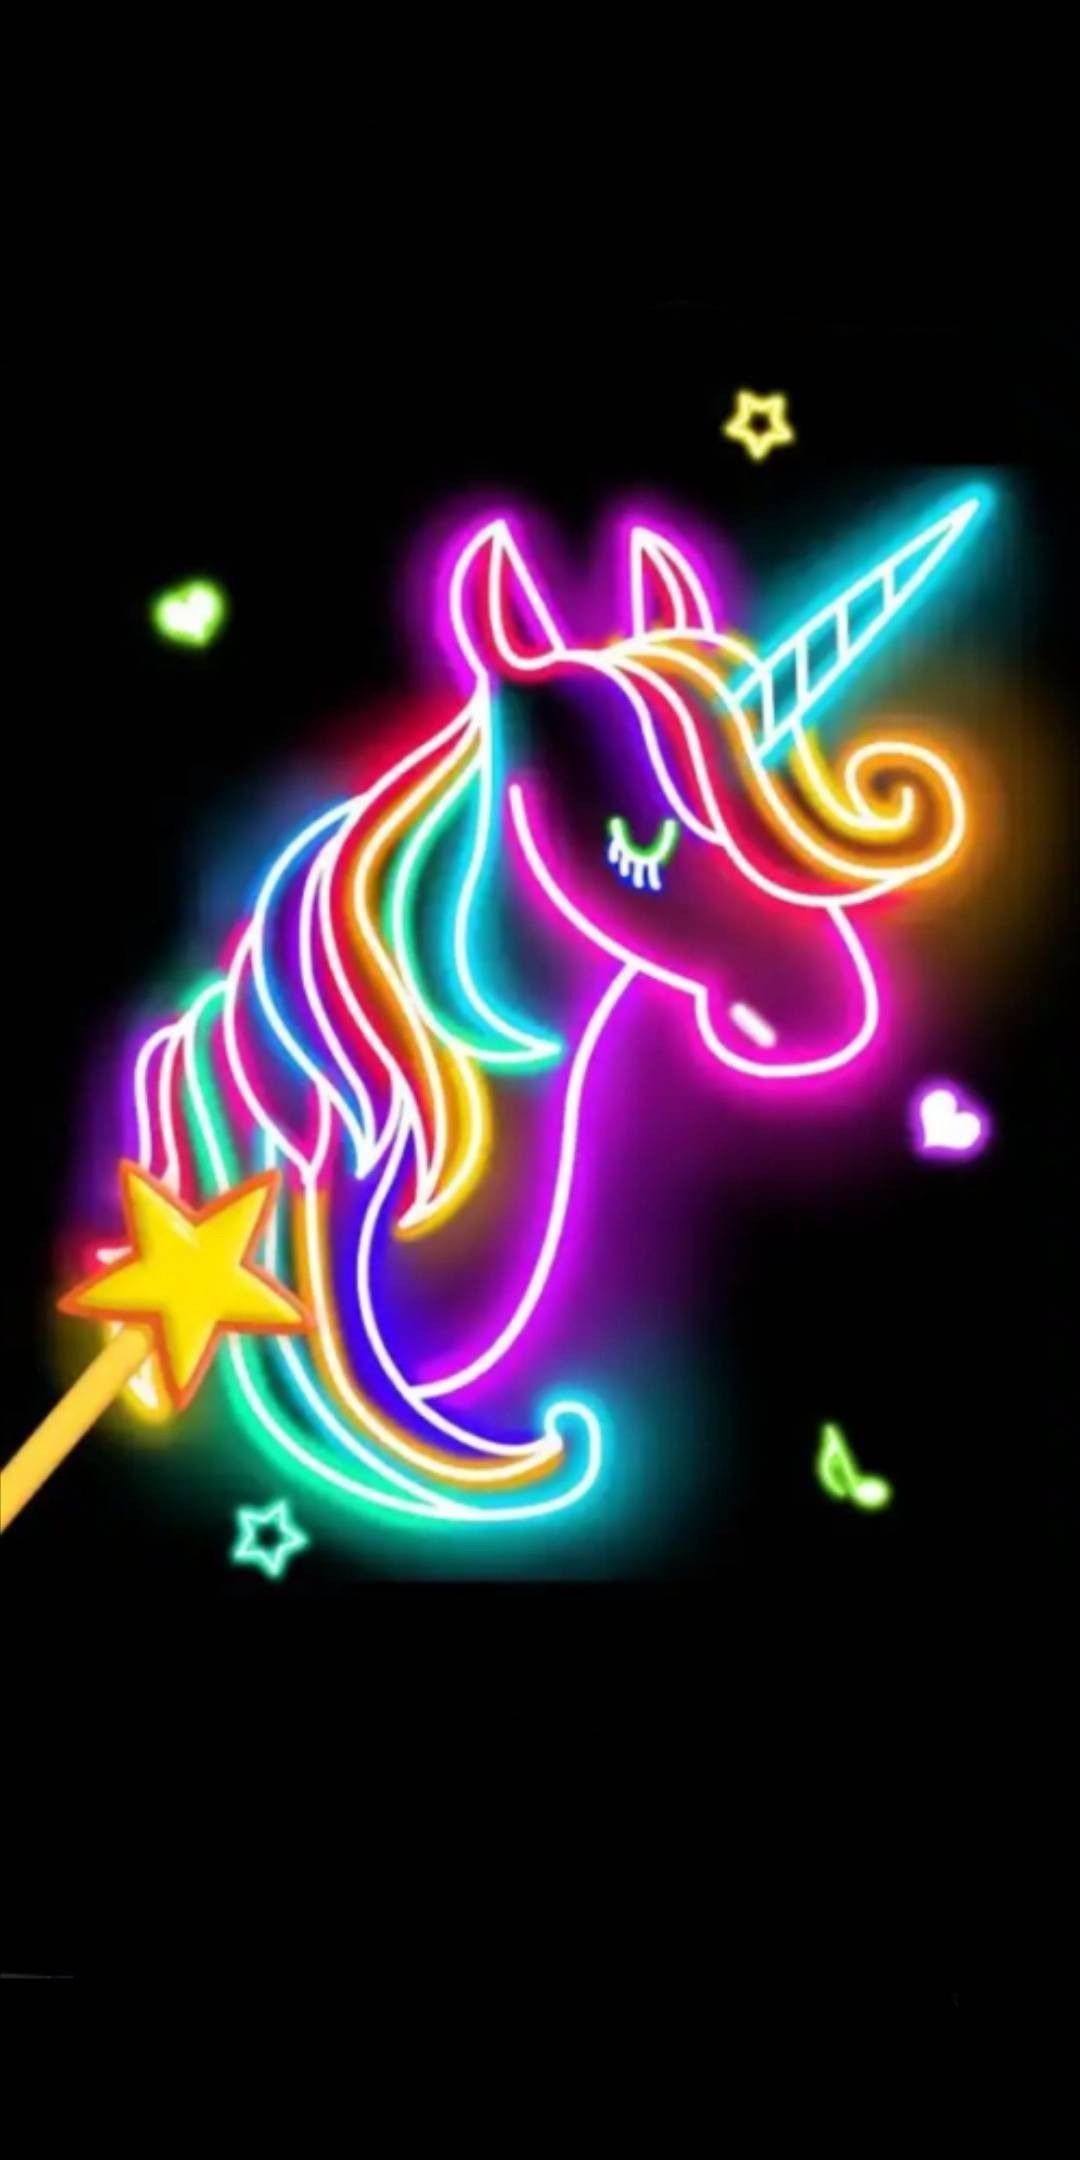 Glow Wallpaper. Unicorn wallpaper cute, Unicorn wallpaper, iPhone wallpaper unicorn